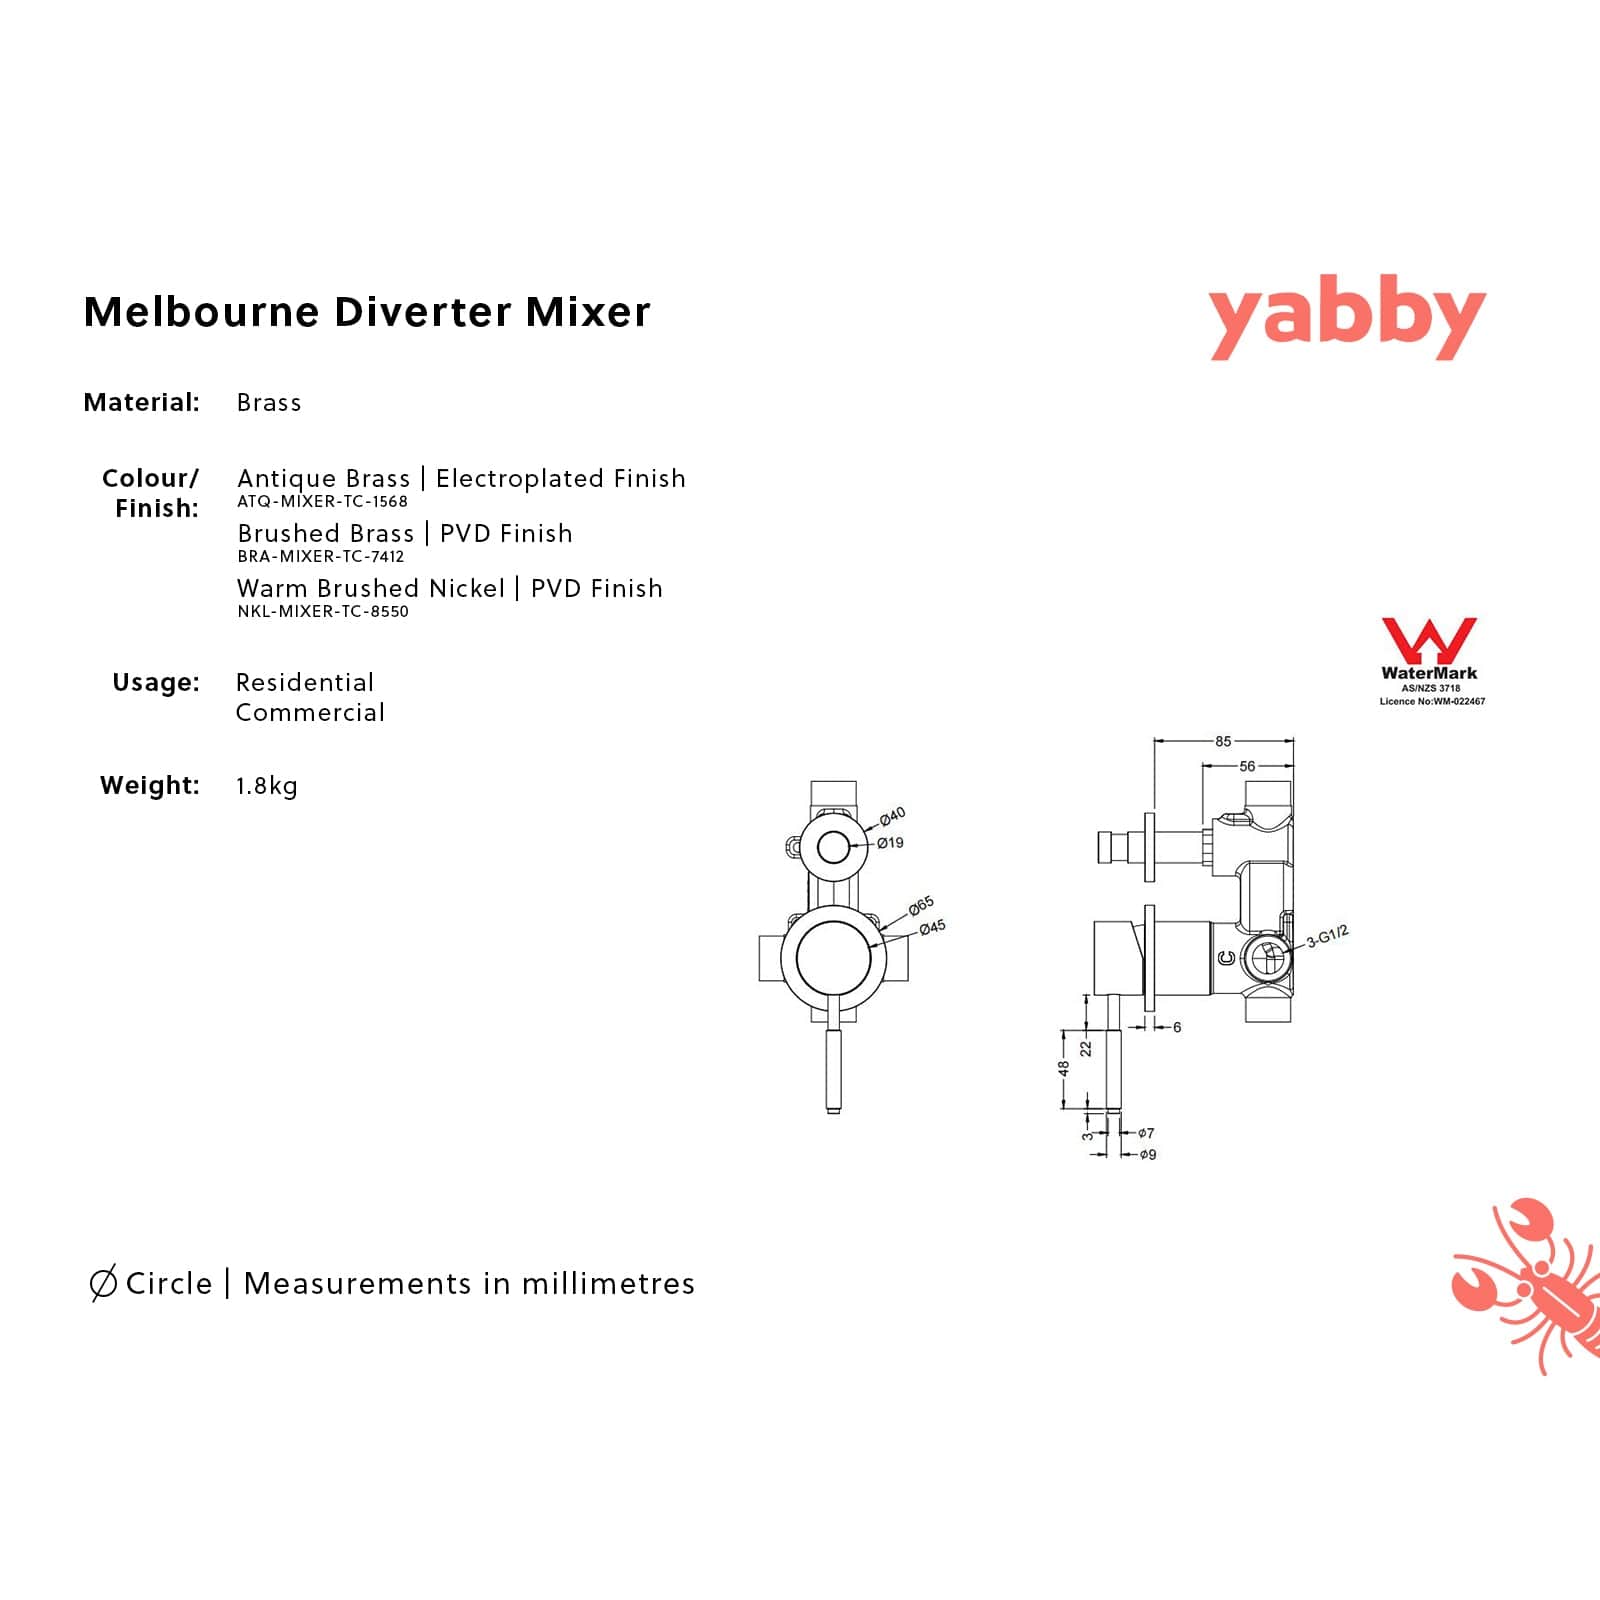 TileCloud TAPWARE Melbourne Diverter Mixer Warm Brushed Nickel